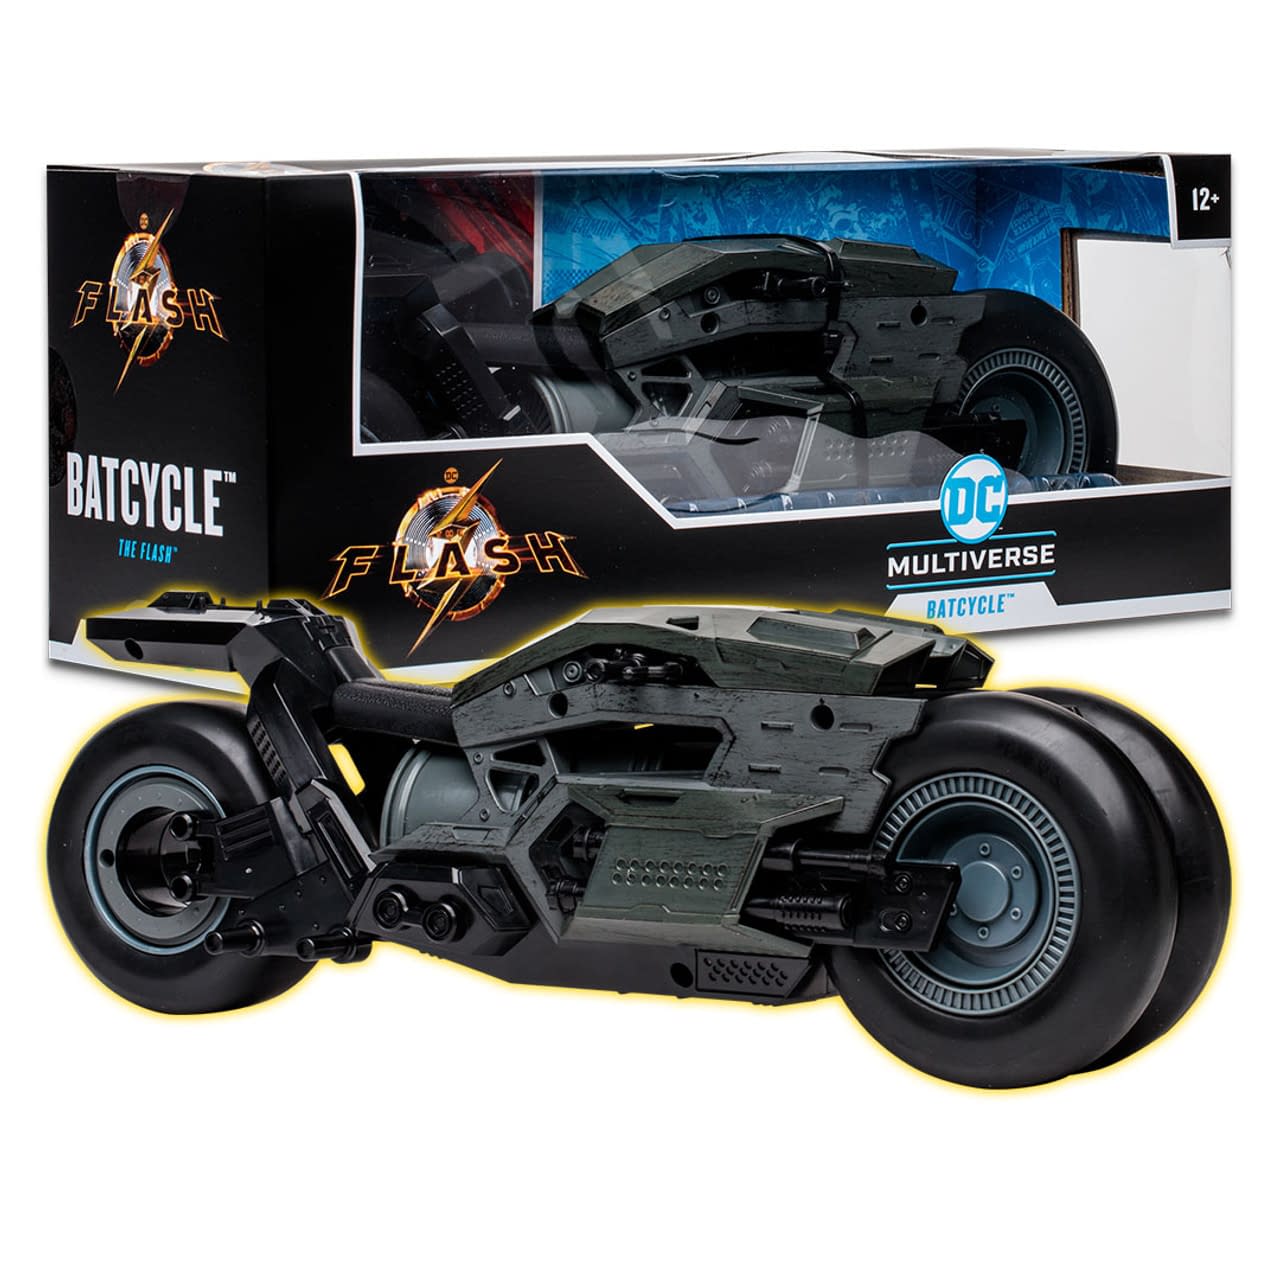 McFarlane Toys Reveals New The Flash Batman Bat-Cycle Vehicle 